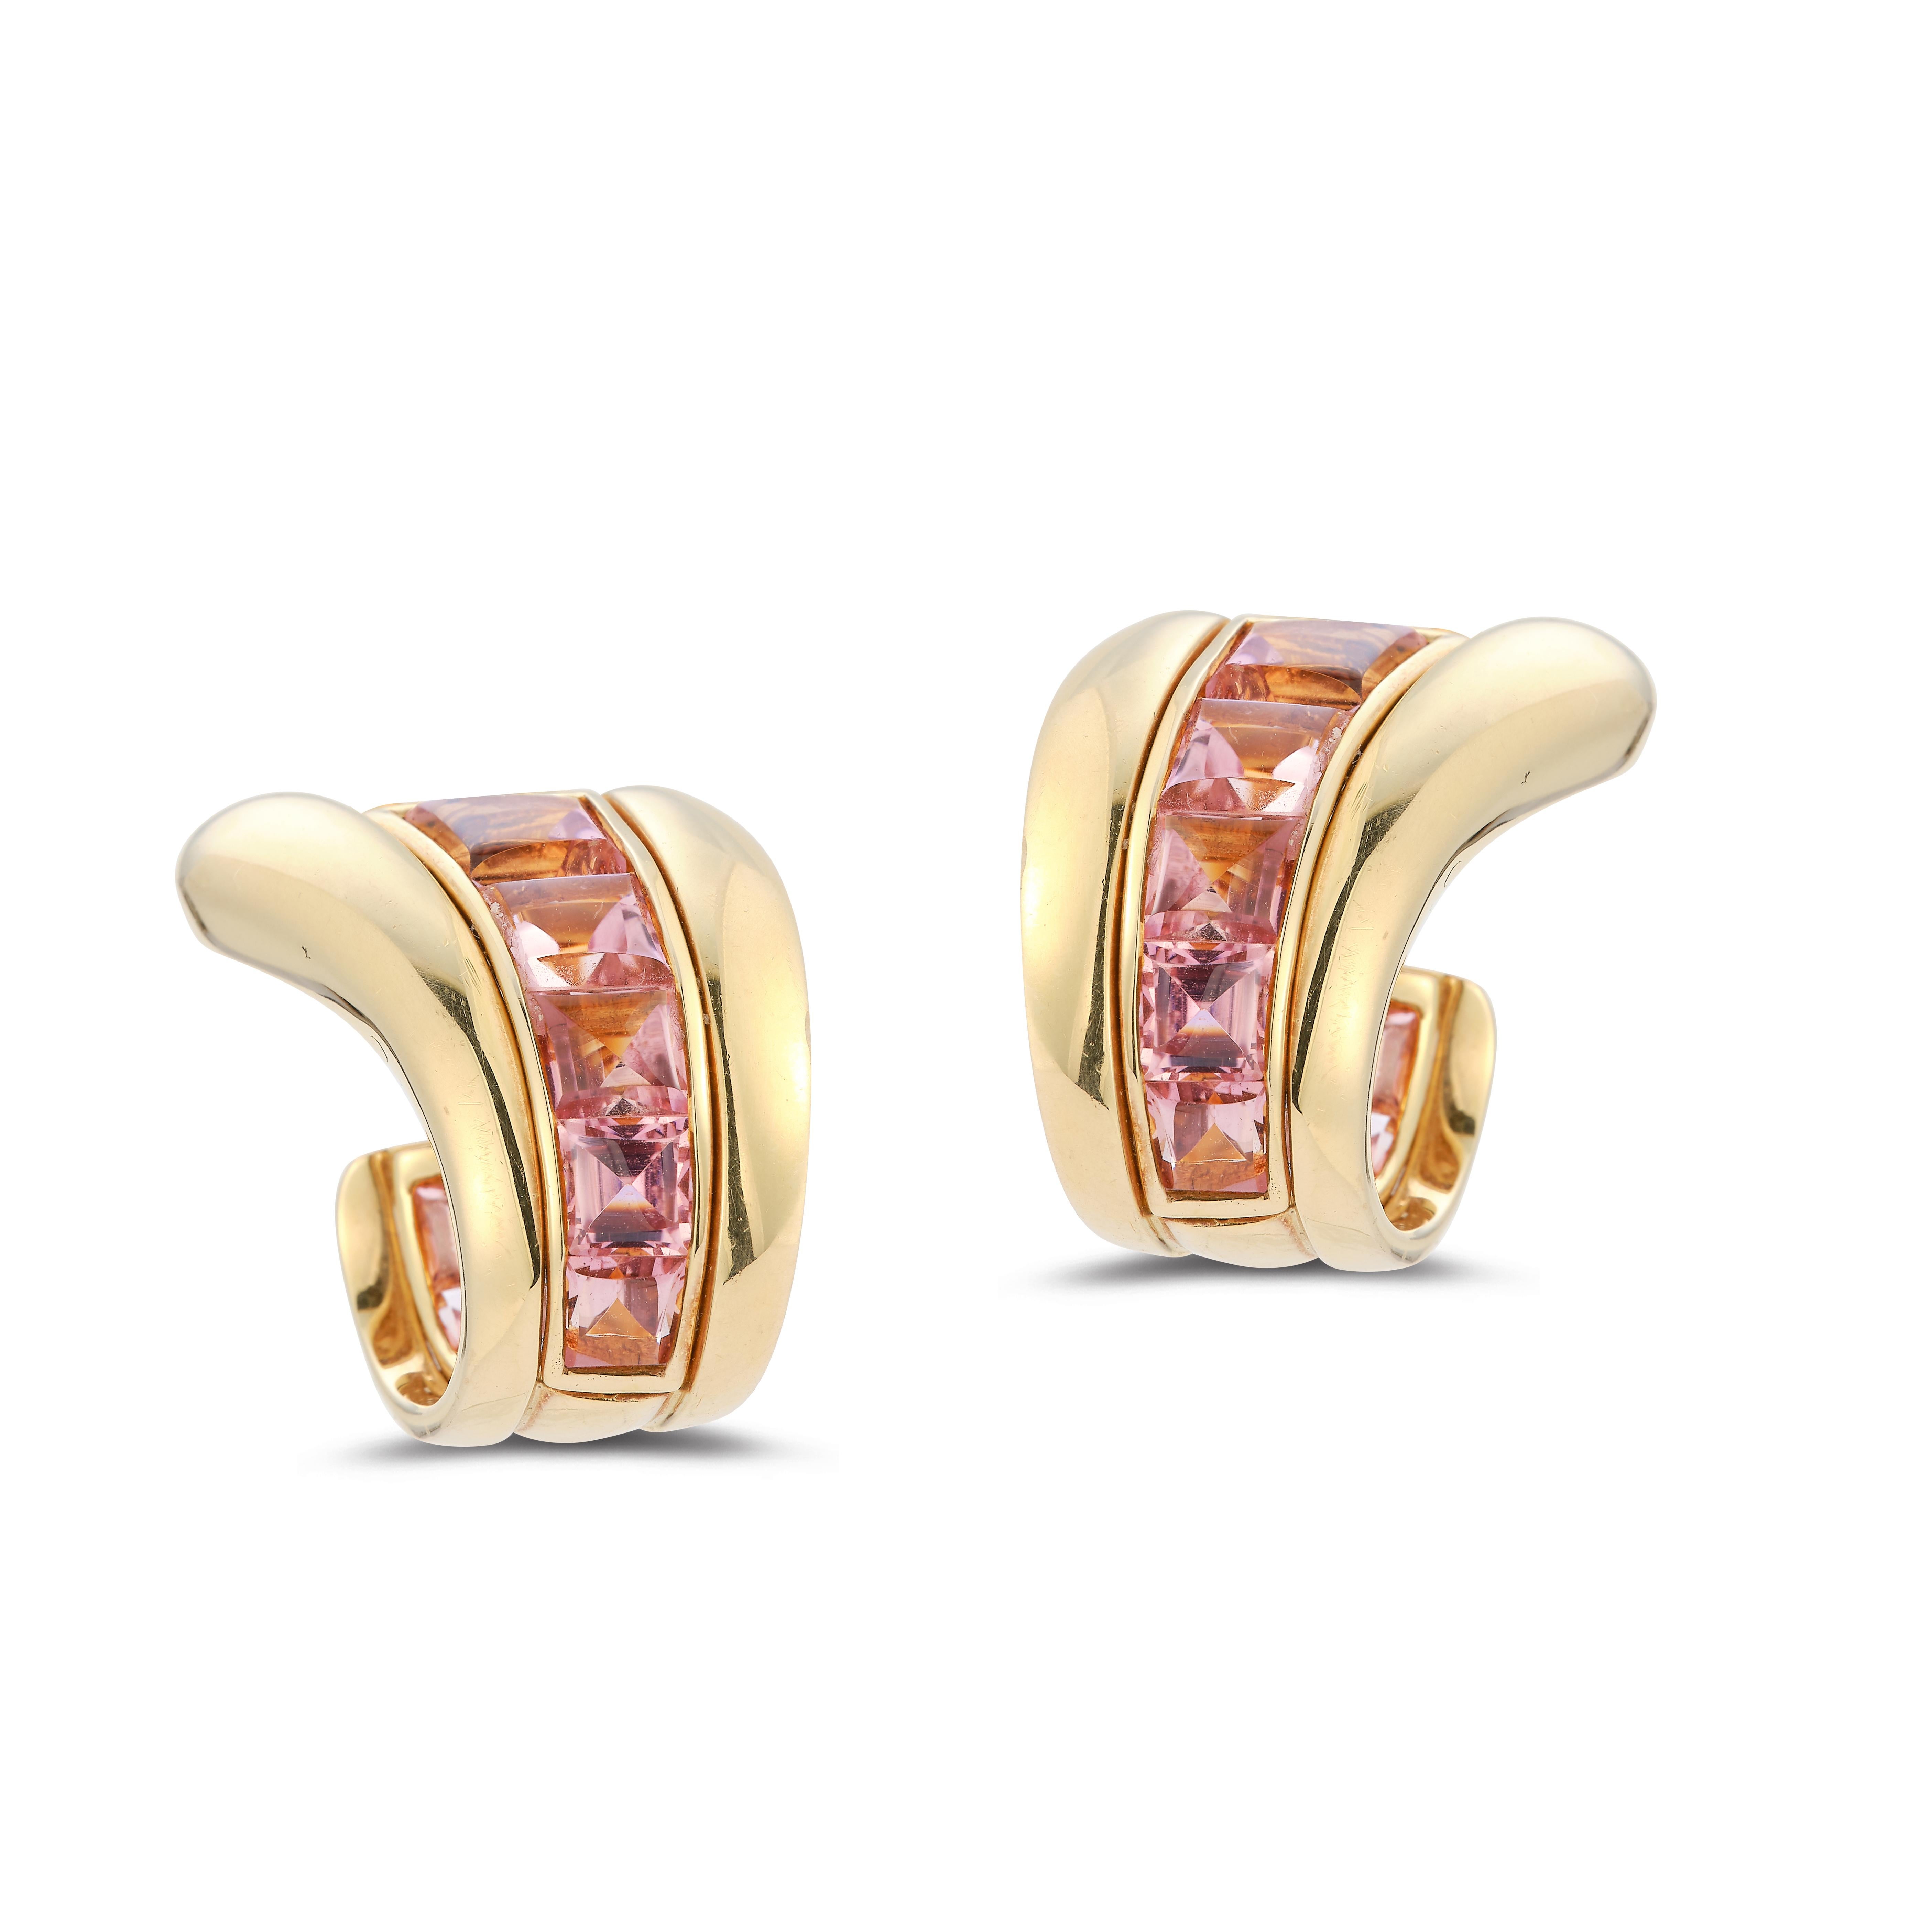 Verdura Tourmaline & Gold Earrings

A row of pink tourmaline set in  yellow gold 

Measurements: 1